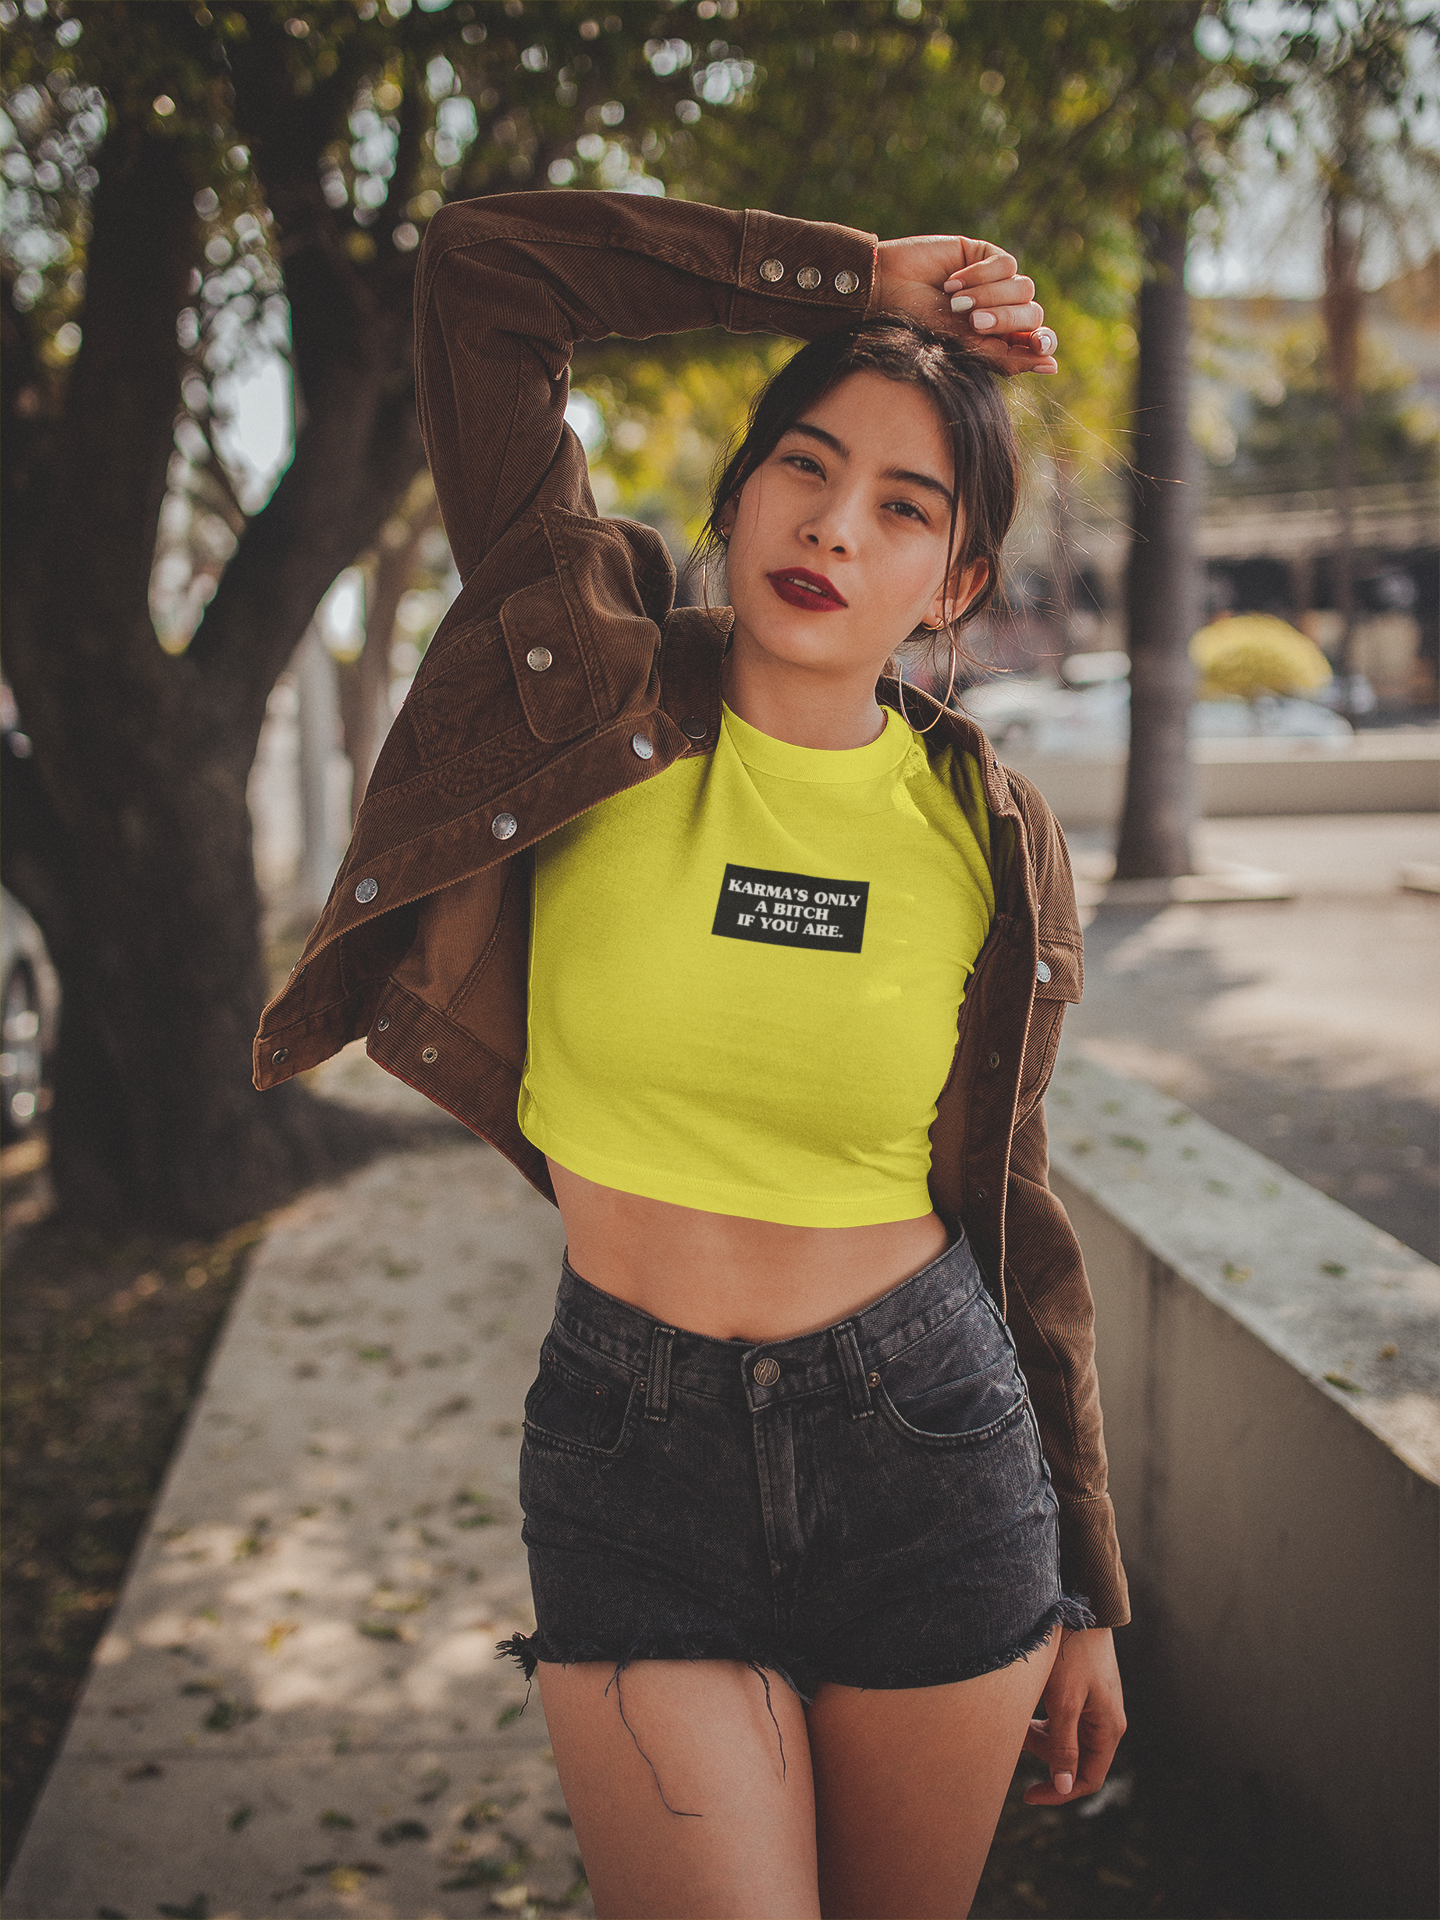 asian girl wearing a crop top template posing at a park a19316 e58a1225 4914 4db3 90d6 f426f66c3b11